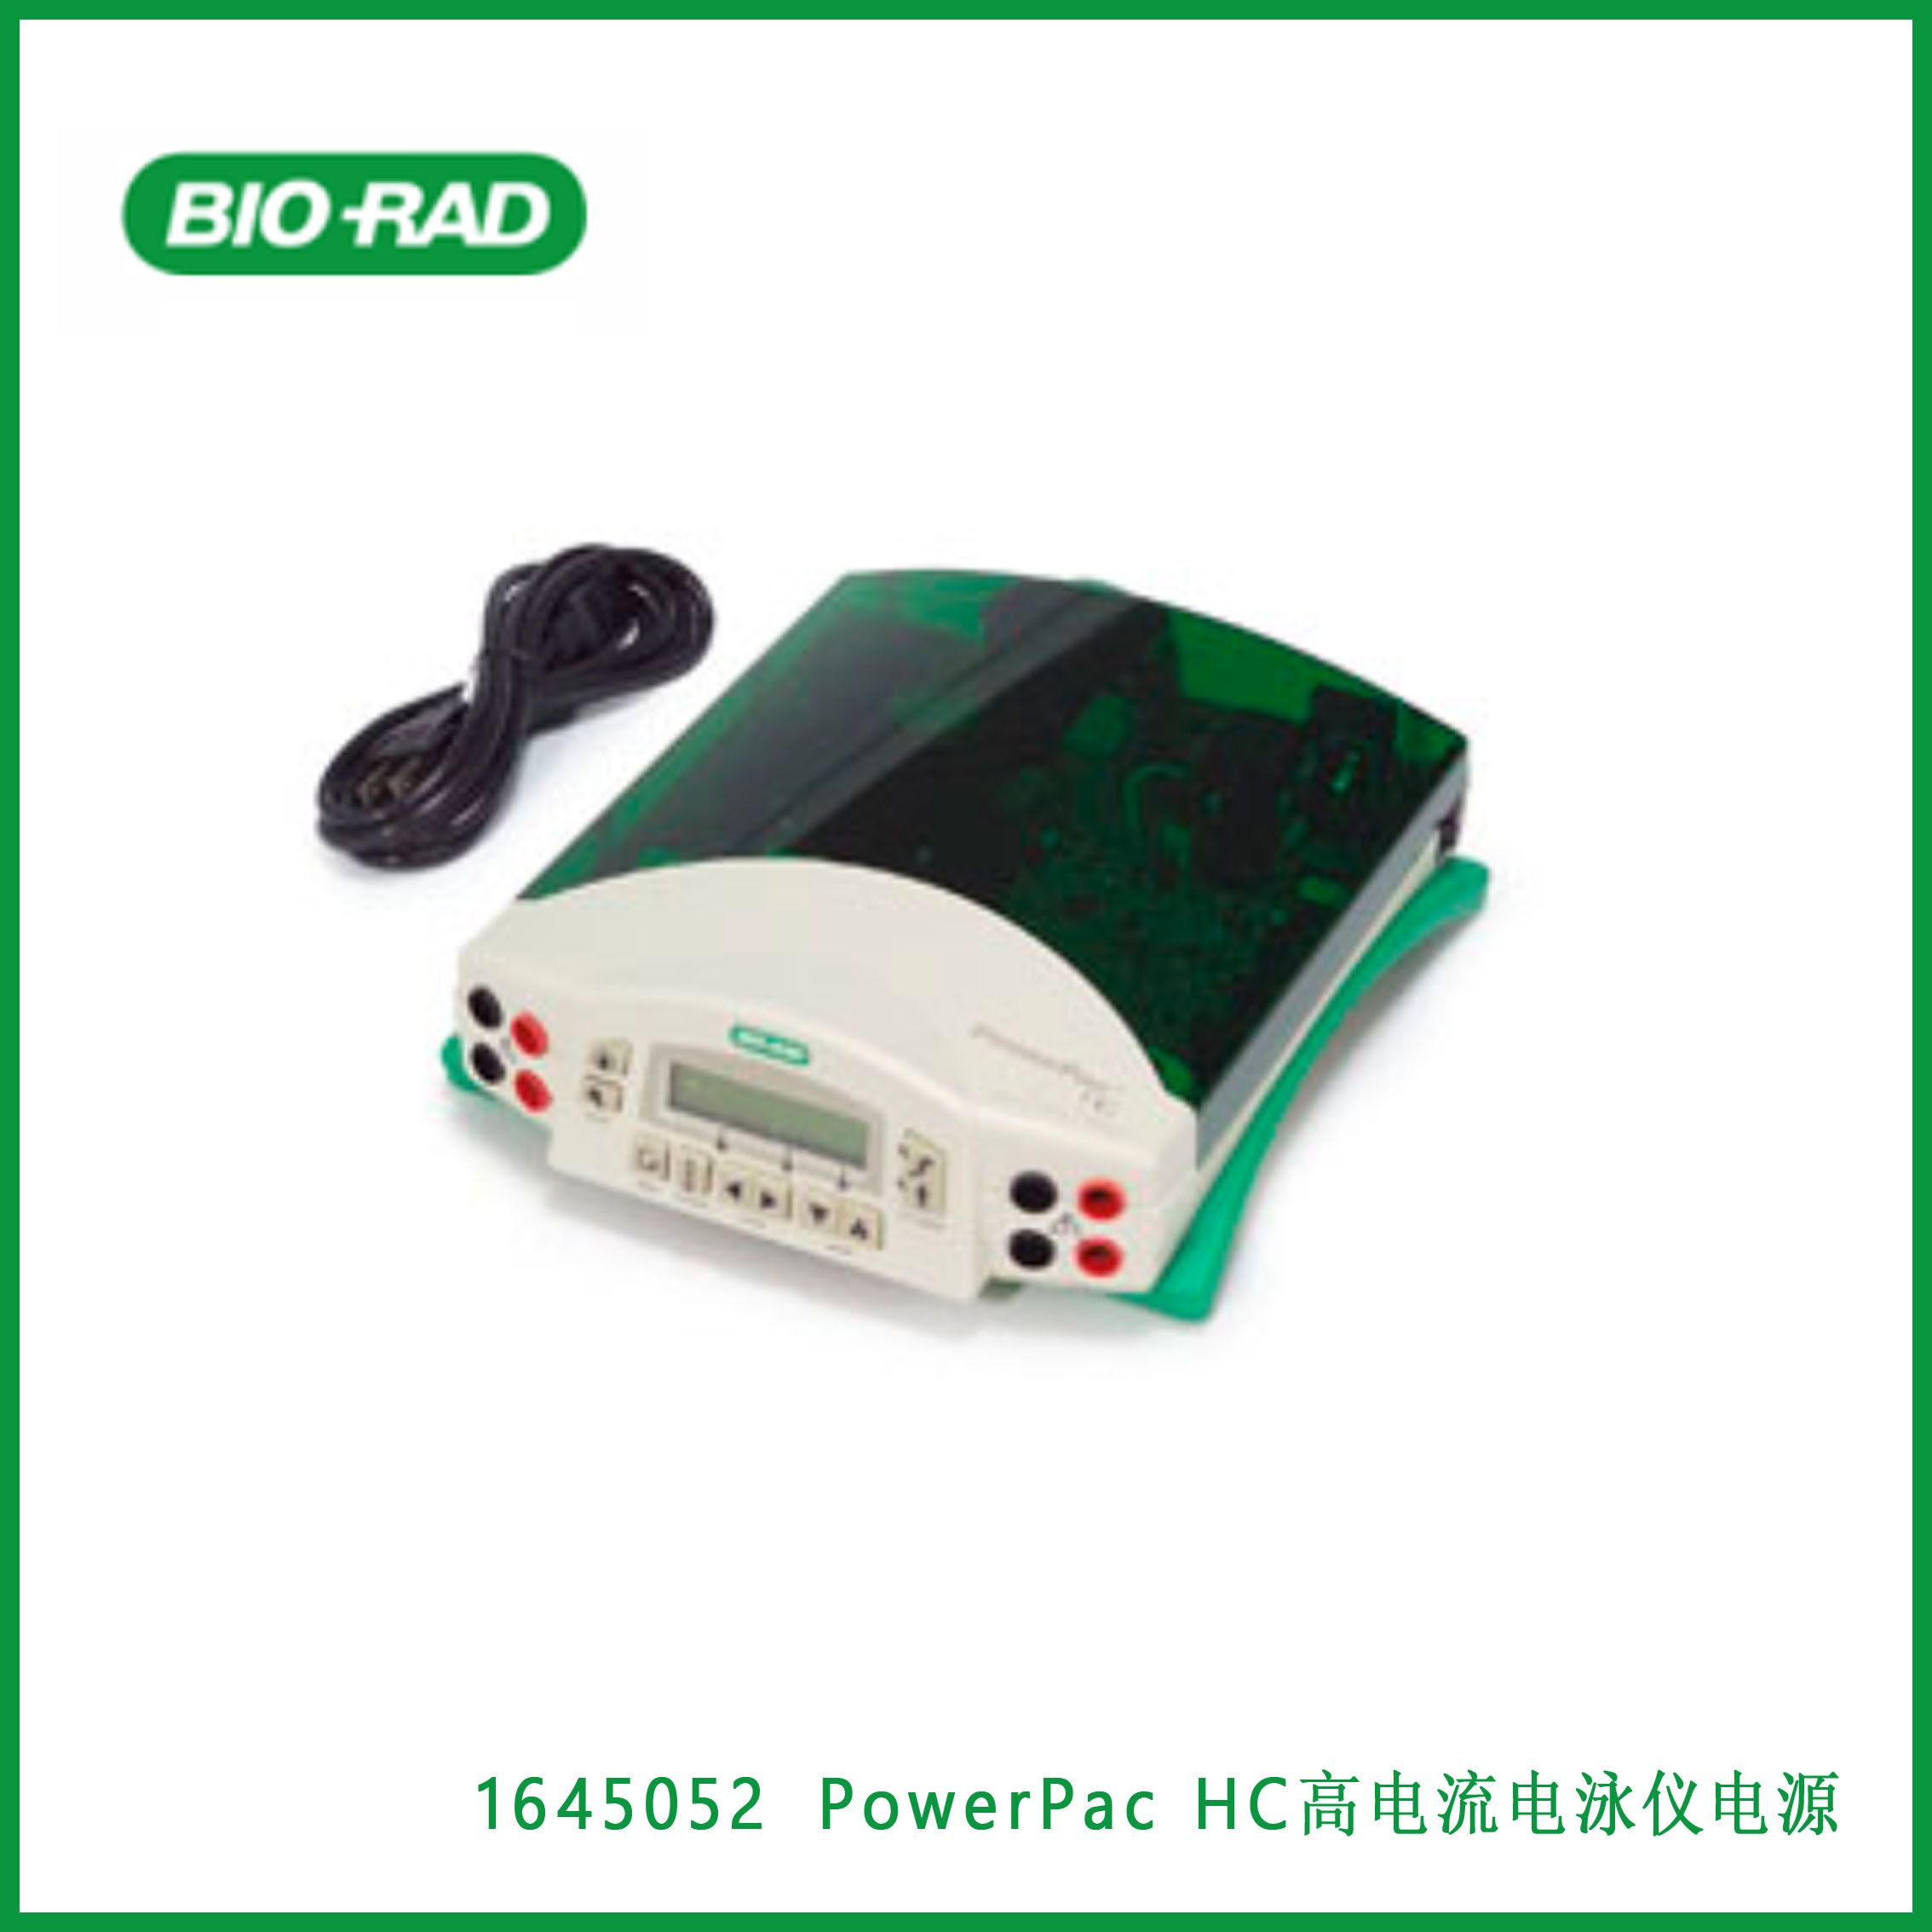 伯乐Bio-Rad1645052PowerPac HC Power Supply; 100 -120/220 -240V，PowerPac HC高电流电泳仪电源